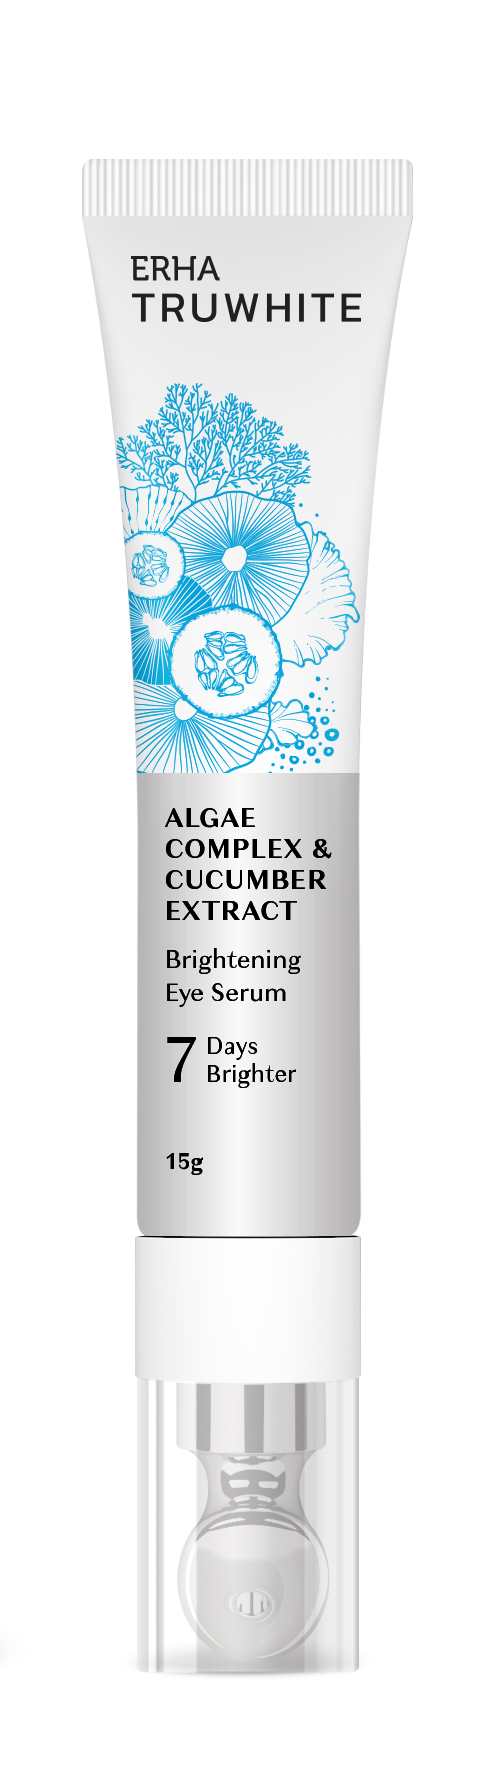 Algae Complex & Cucumber Extract Brightening Eye Serum